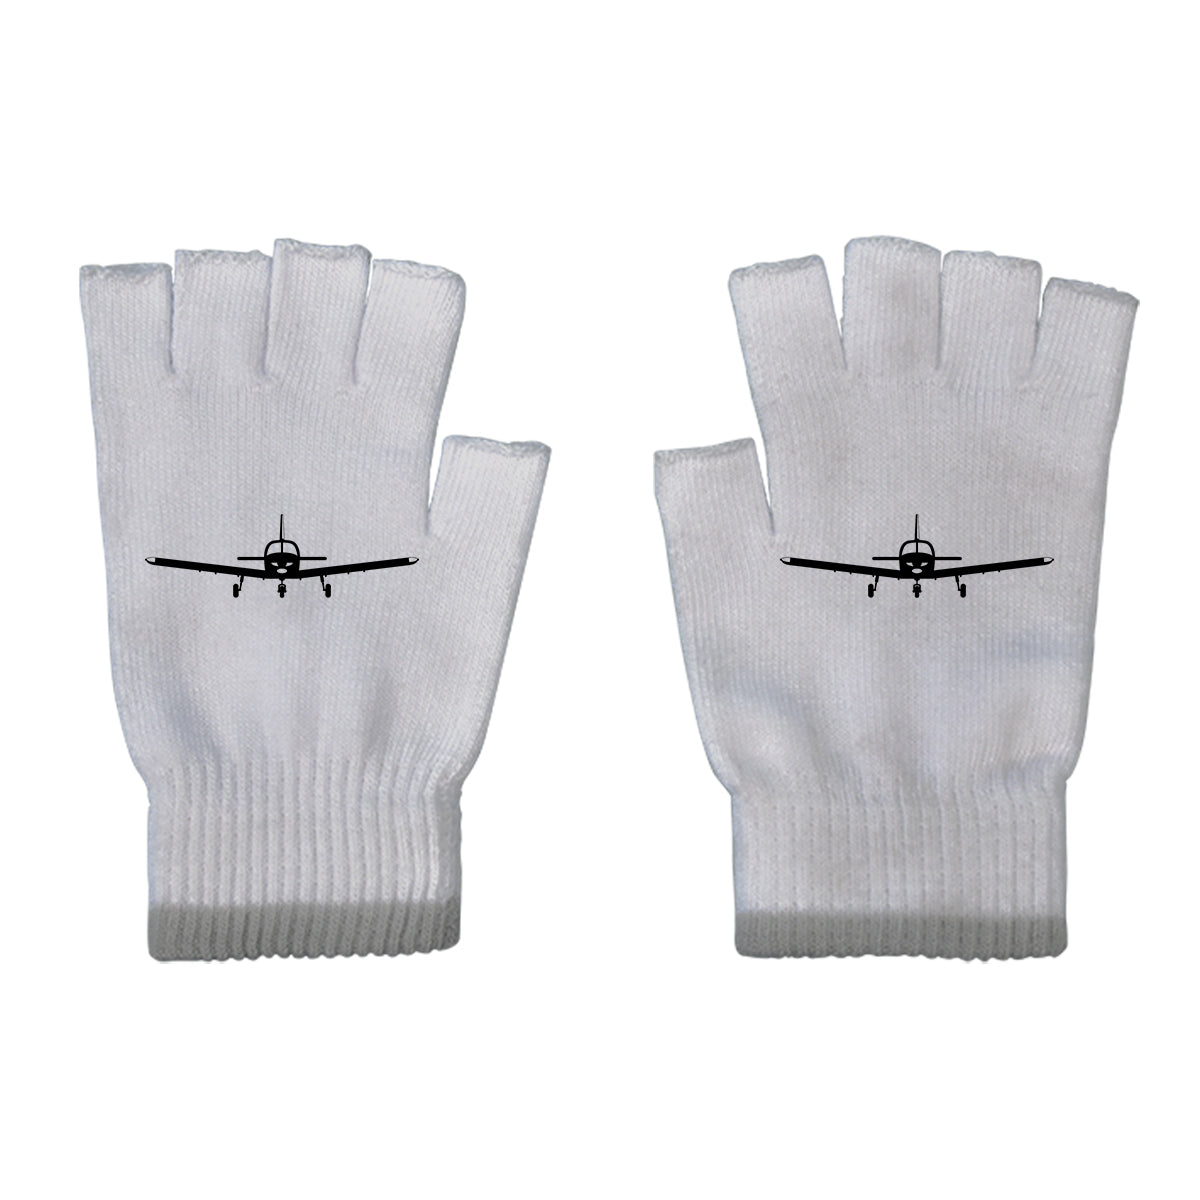 Piper PA28 Silhouette Plane Designed Cut Gloves